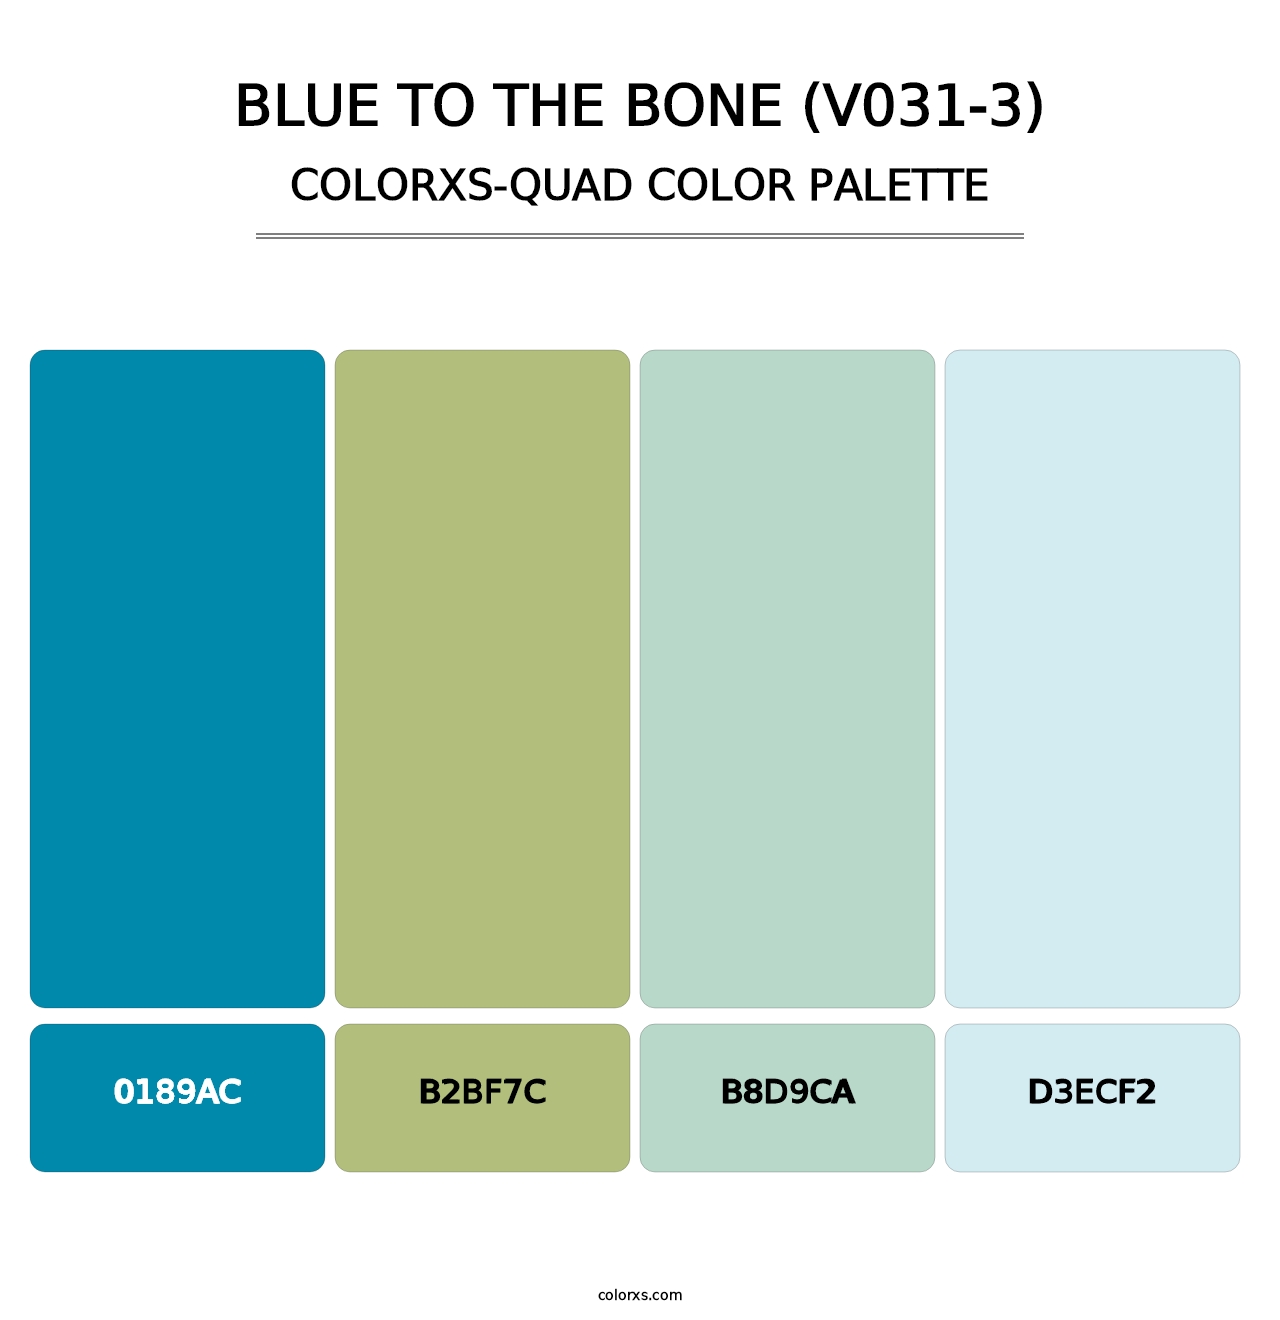 Blue to the Bone (V031-3) - Colorxs Quad Palette